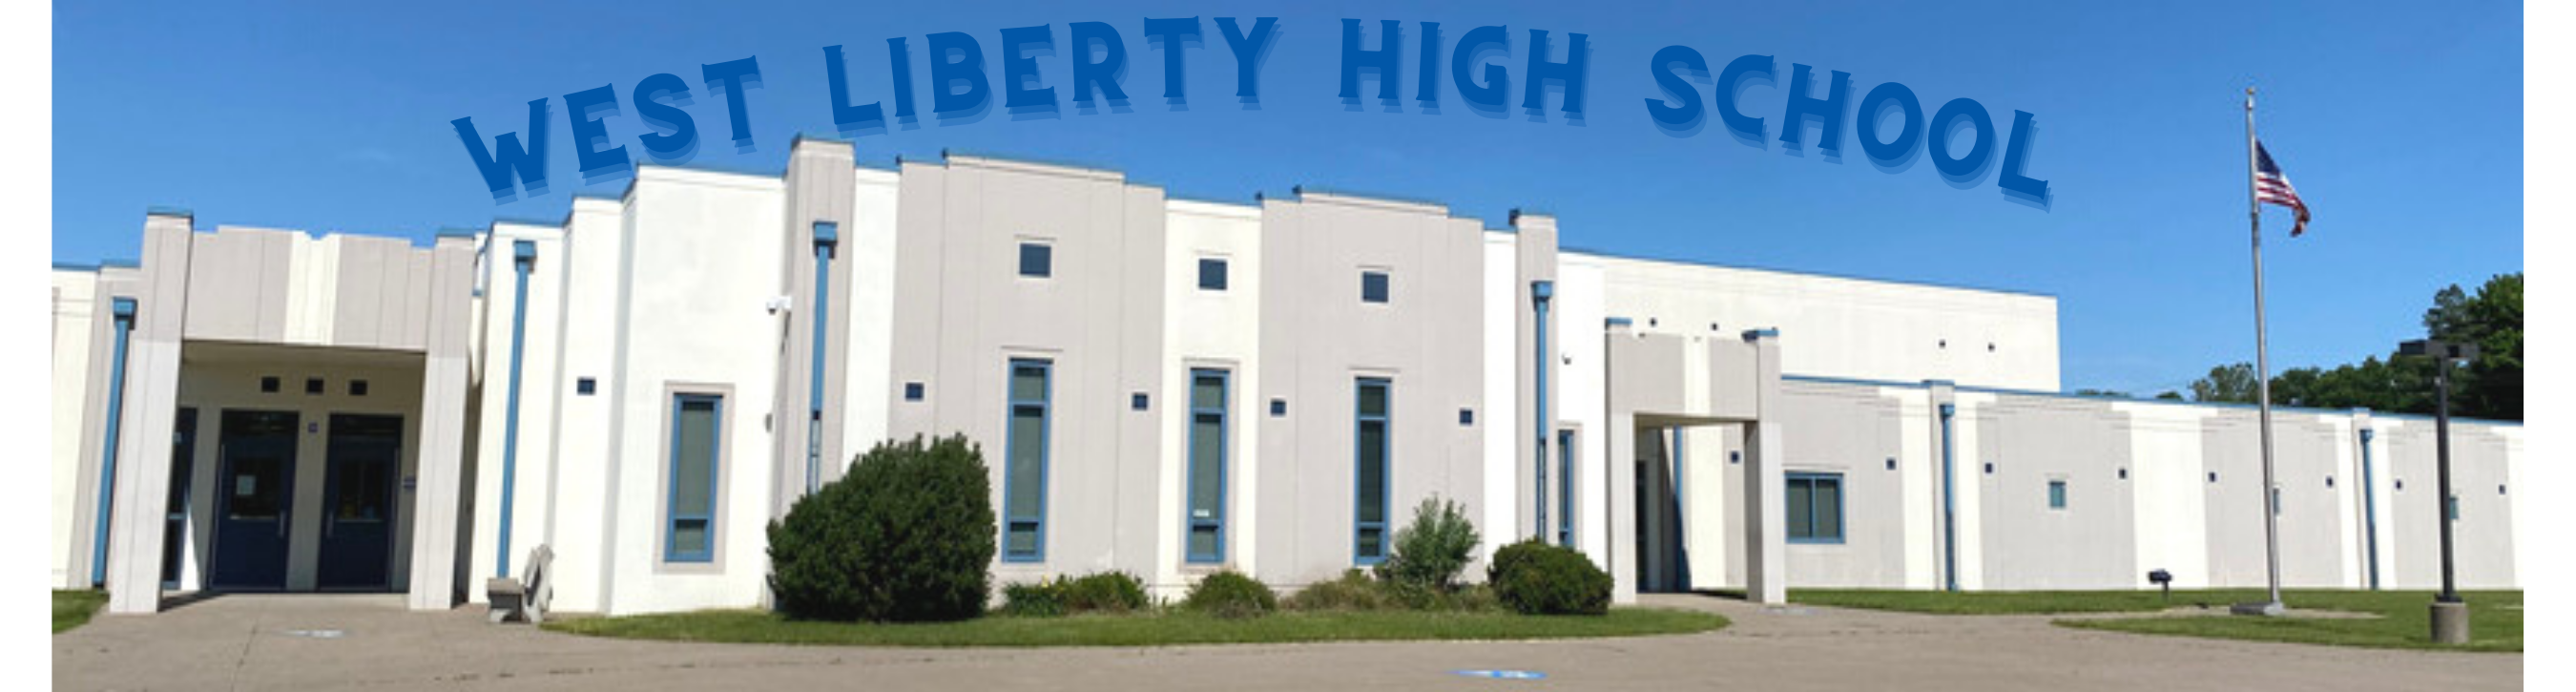 West Liberty High School